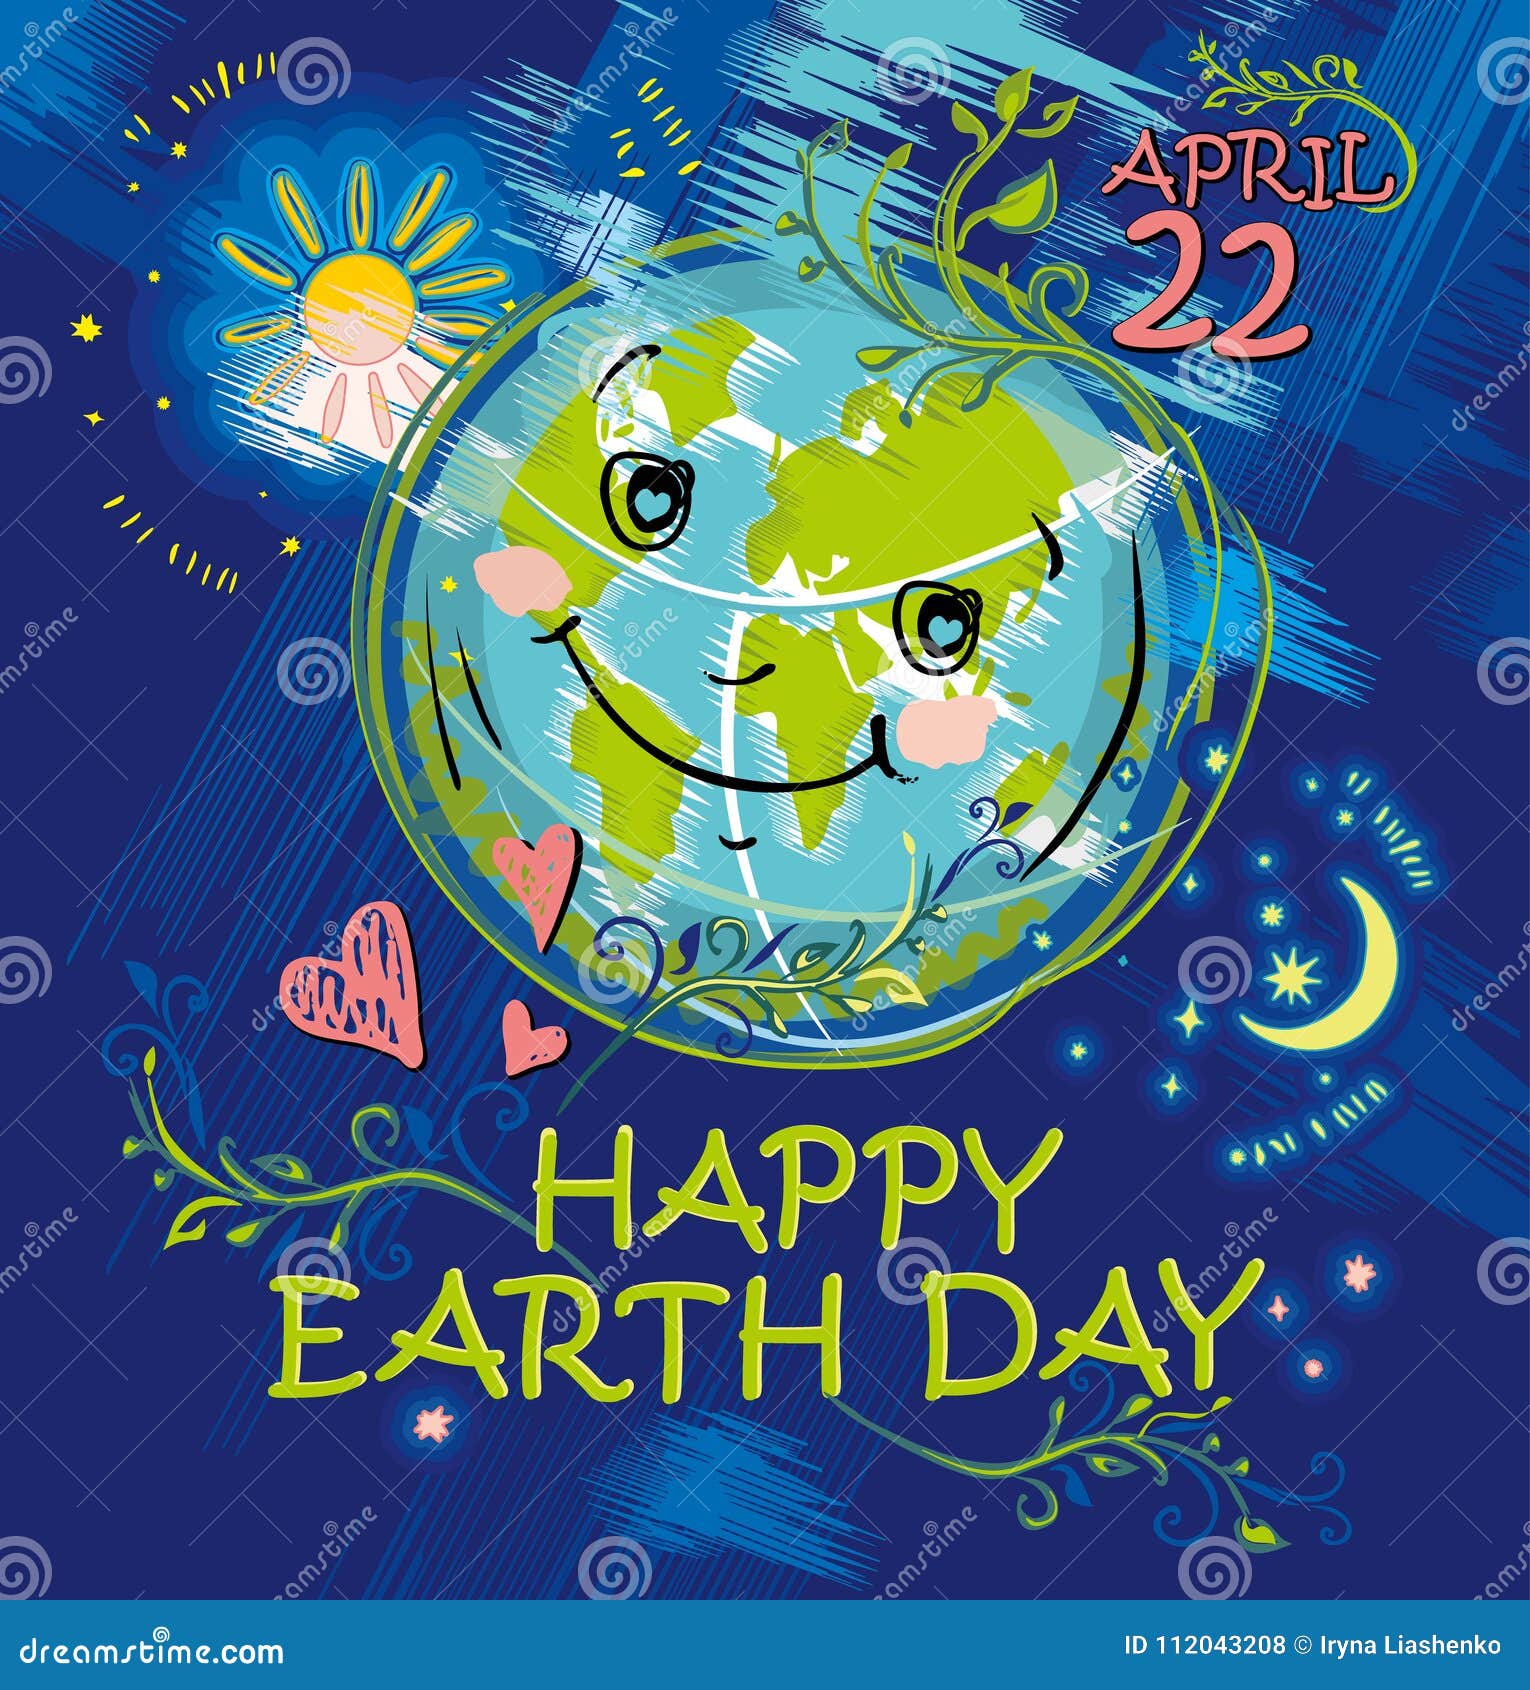 Happy Earth Day. April 22. Happy planet smiles